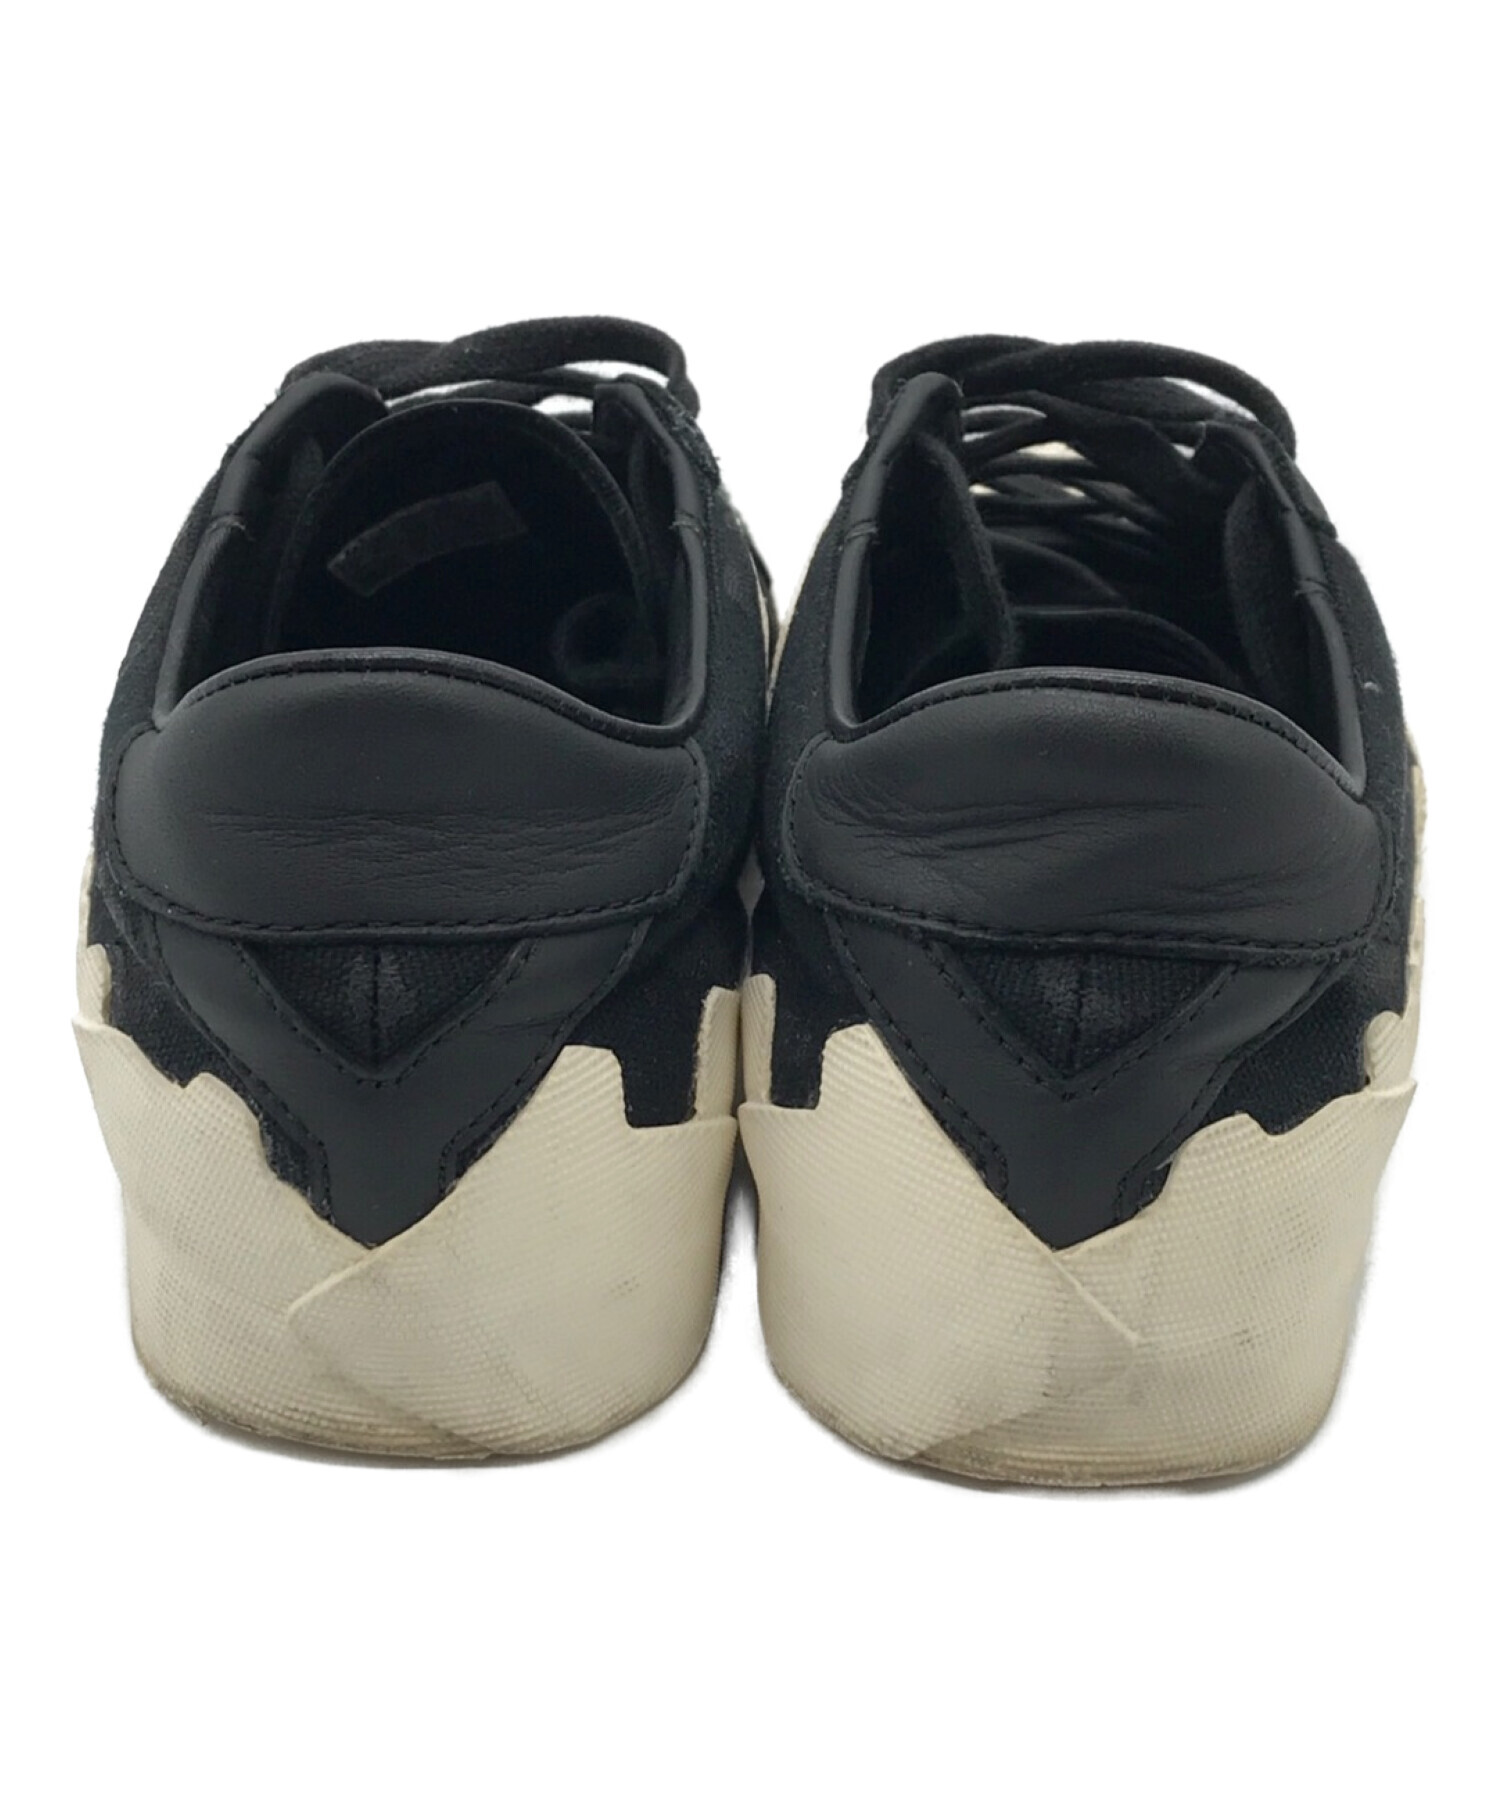 adidas (アディダス) YOHJI YAMAMOTO (ヨウジヤマモト) TAKUSAN LOW ブラック サイズ:25